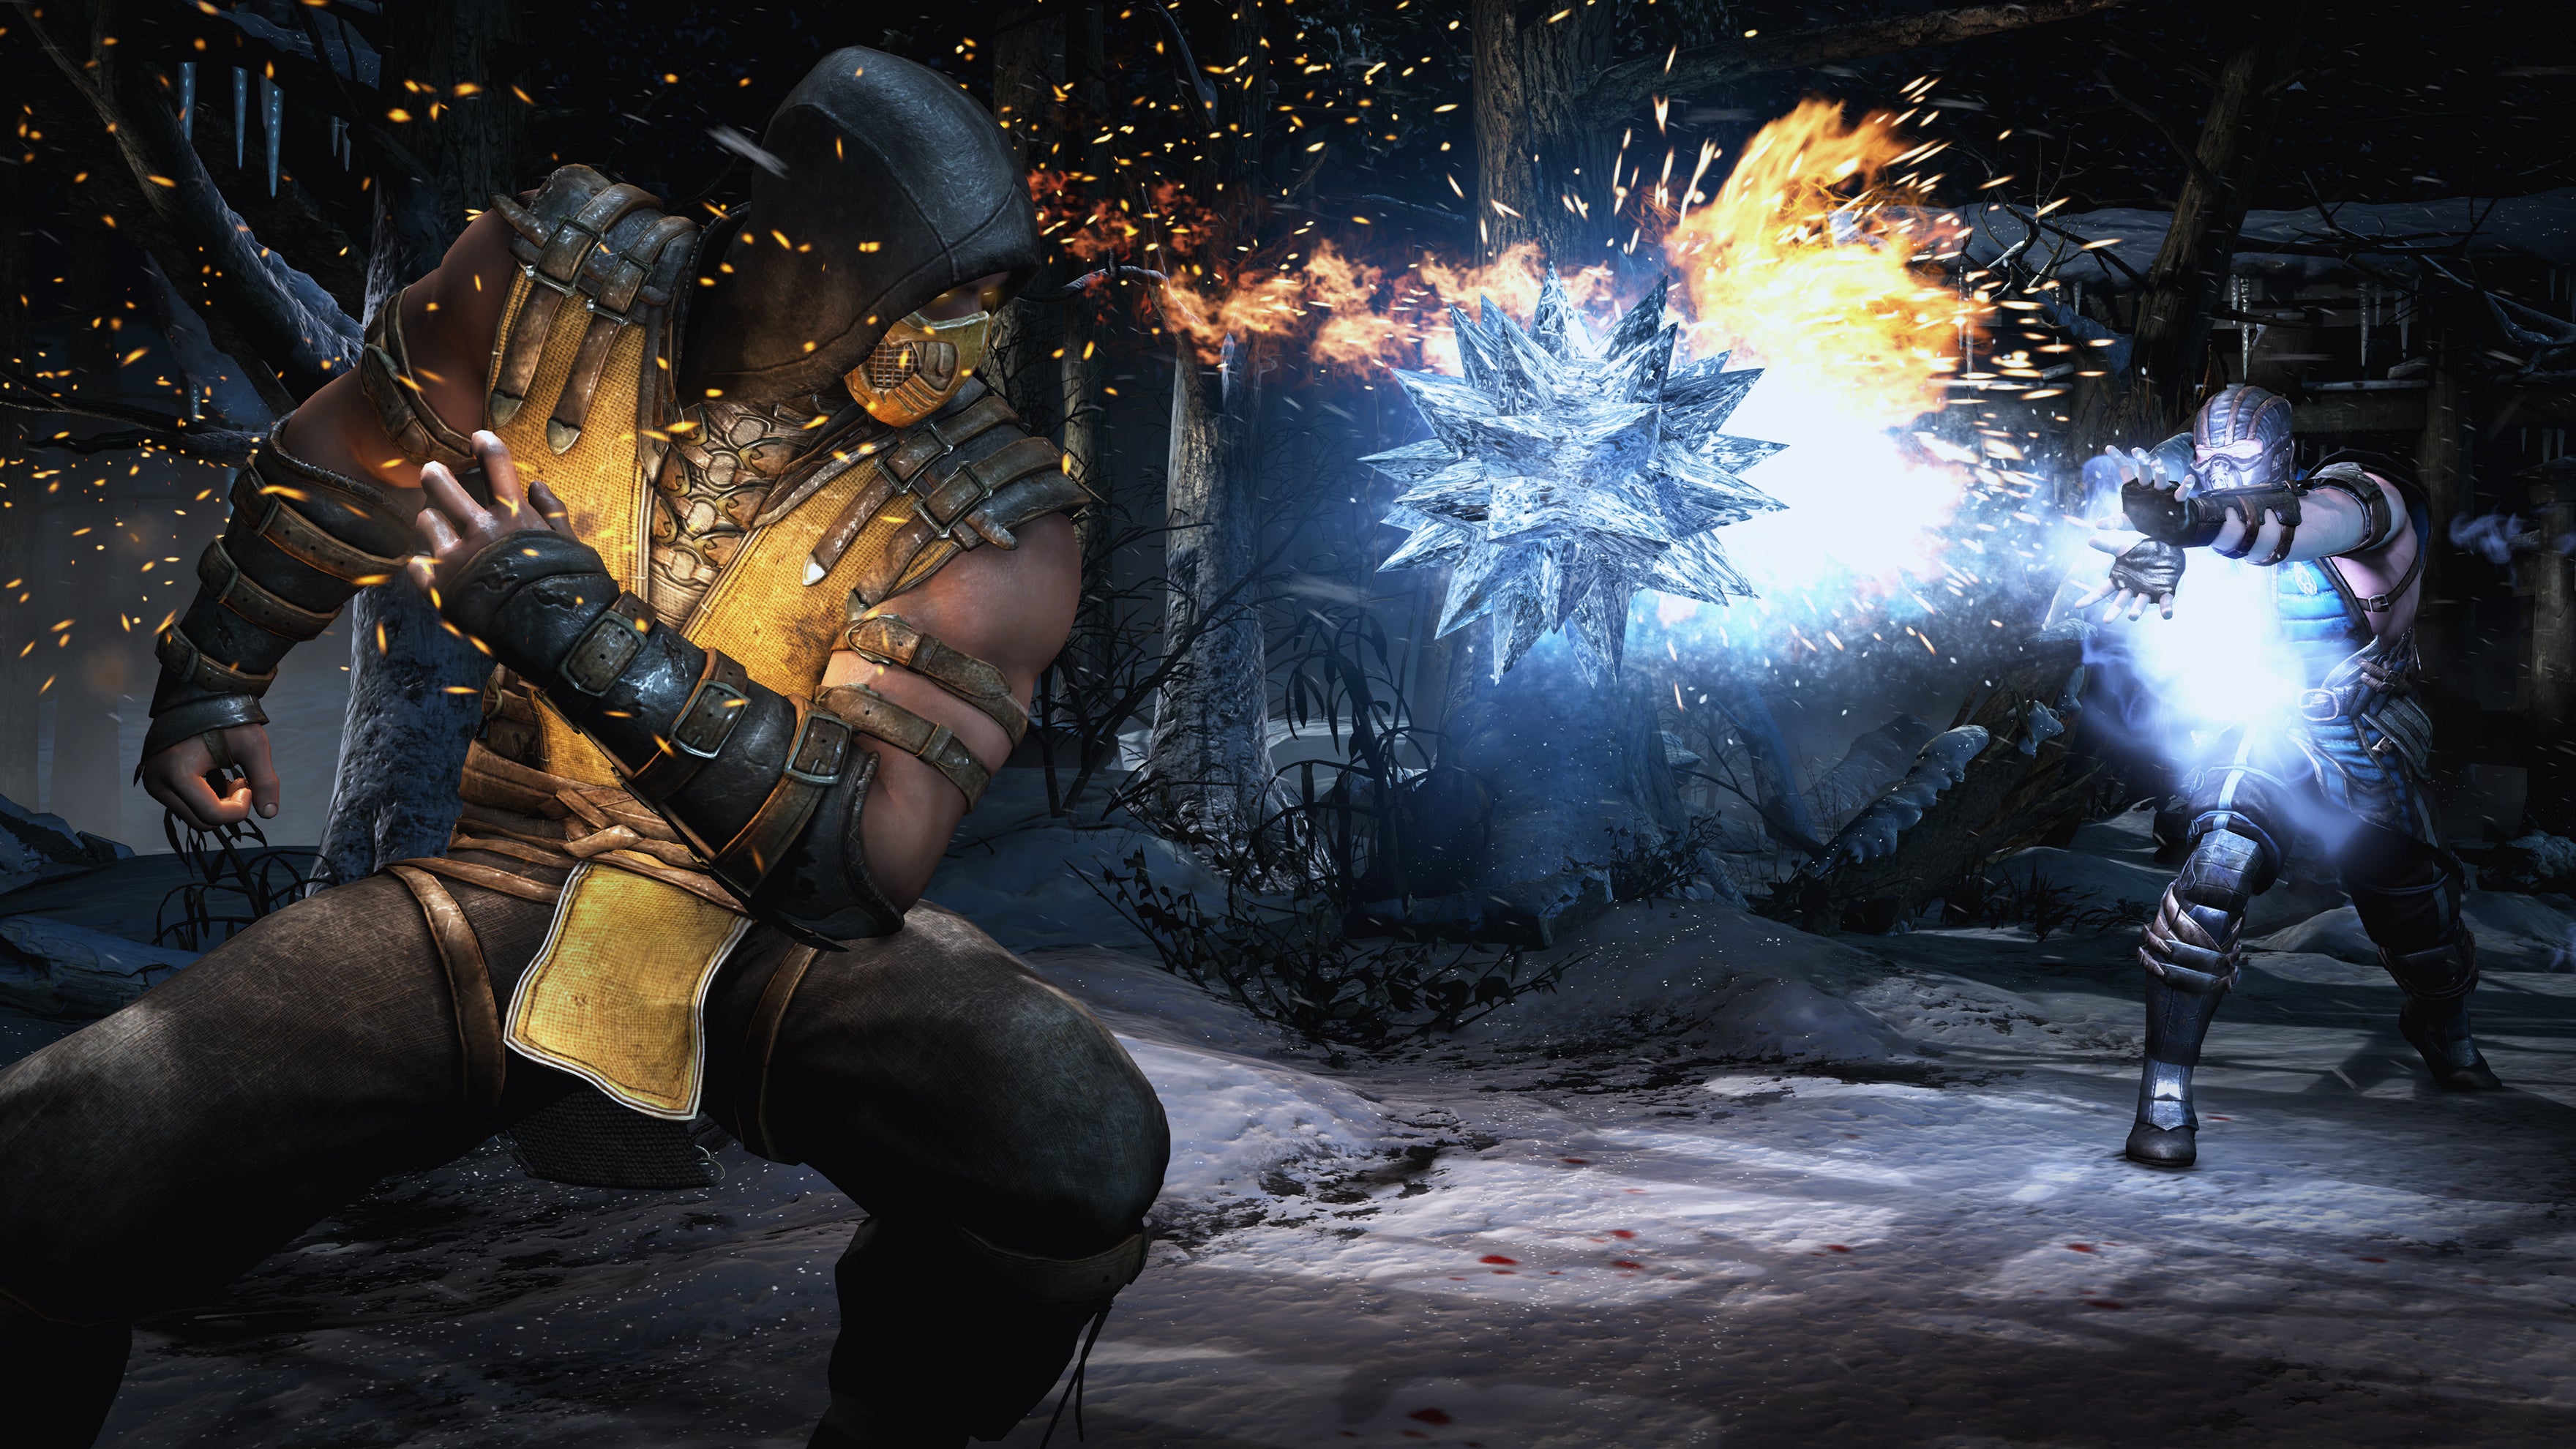 Obrazki dla Mortal Kombat X w wersji na PS3 i X360 opóźnione - raport